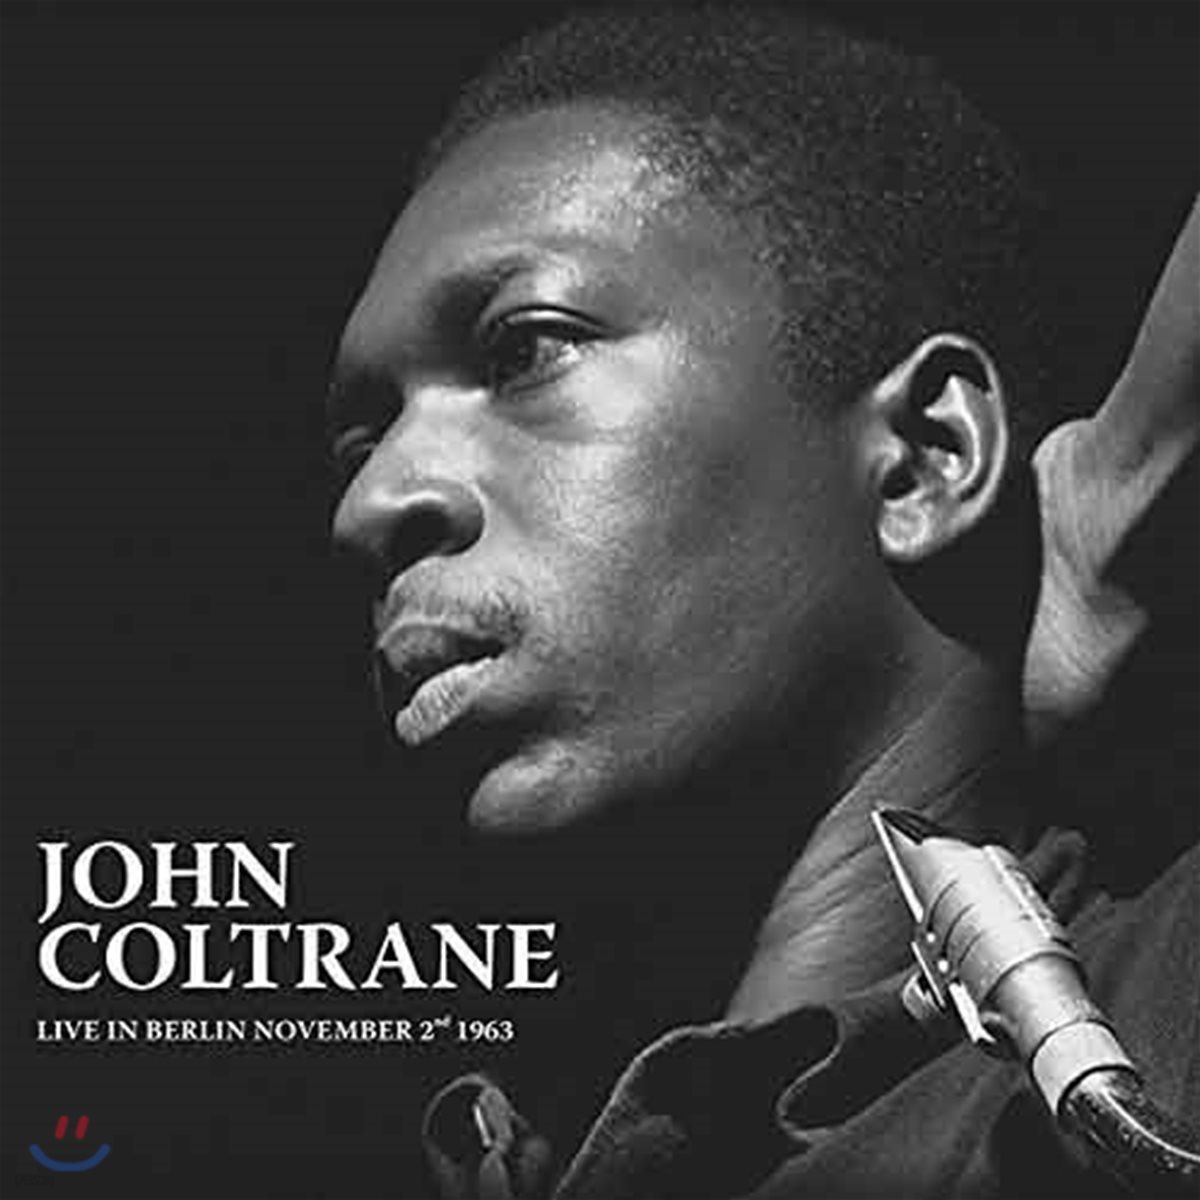 John Coltrane (존 콜트레인) - Live In Berlin November 2nd 1963 (1963년 베를린 라이브) [클리어 LP]